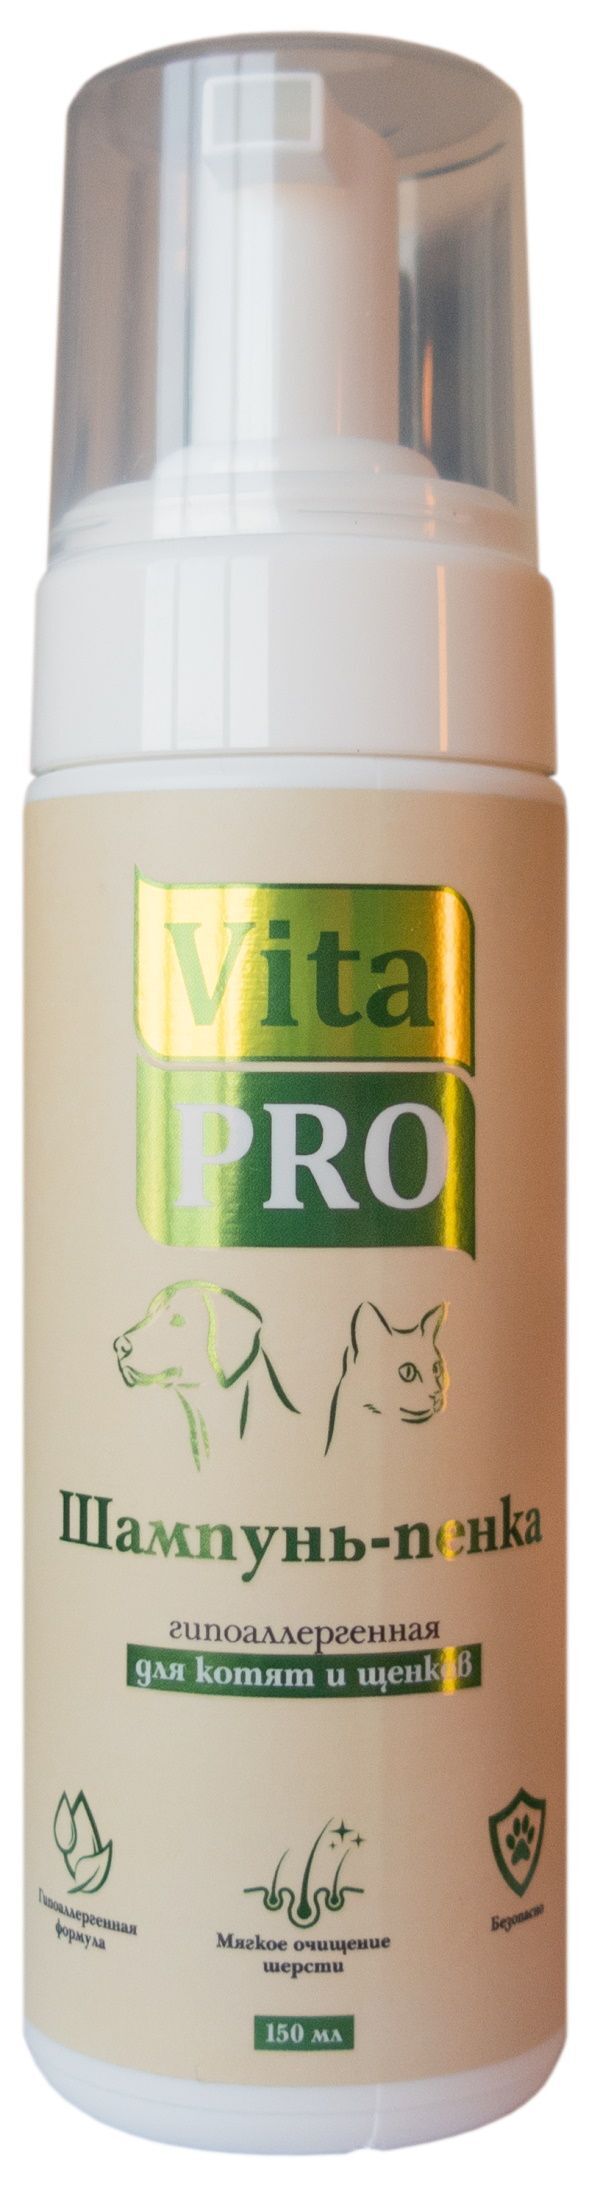 Vita Pro 150 мл шампунь-пенка для лап 1х24